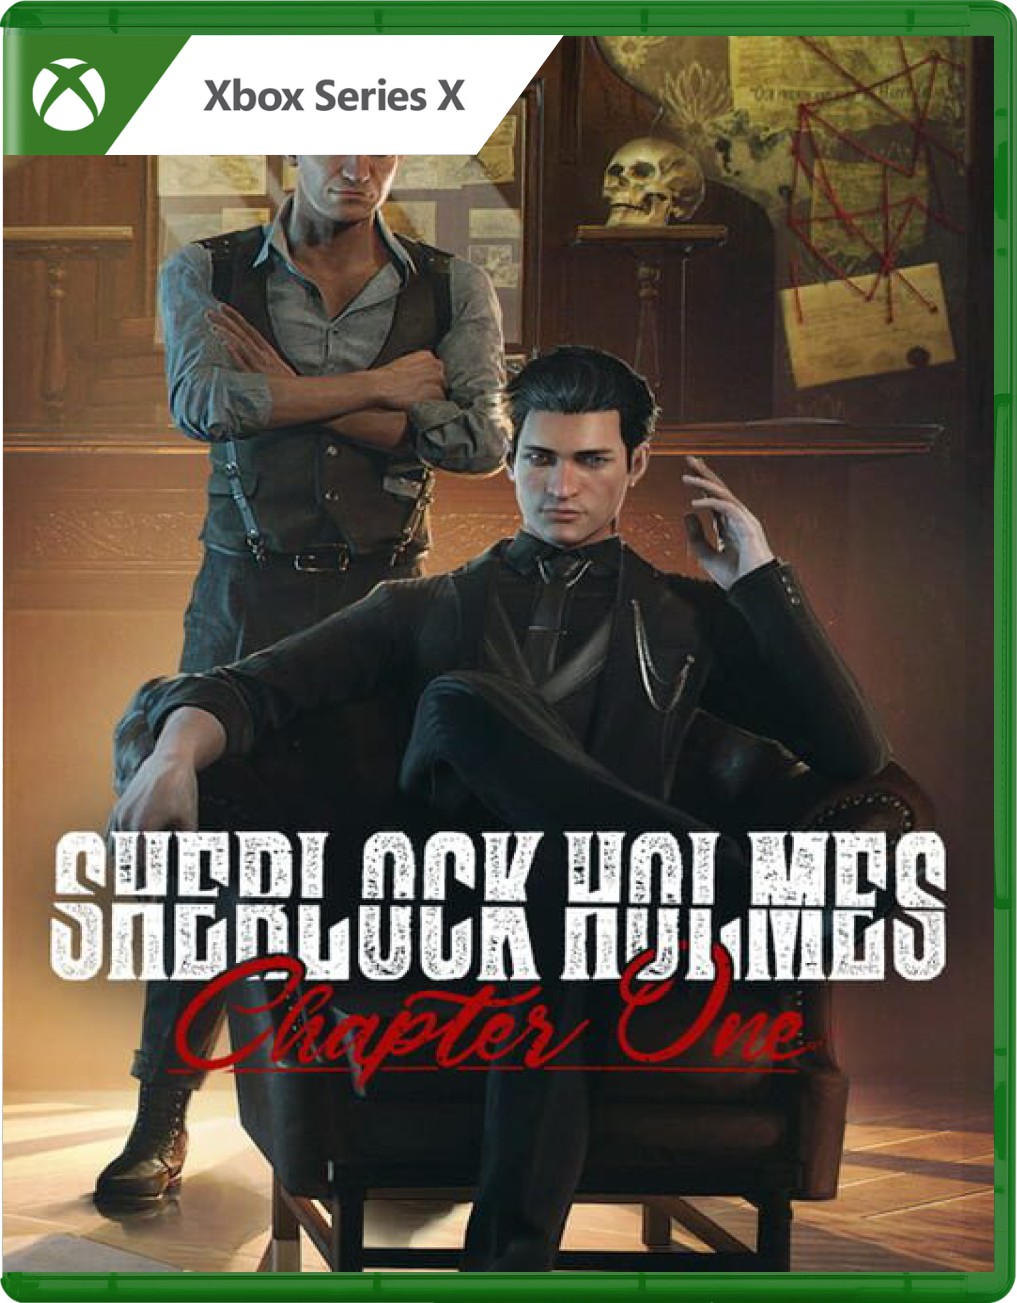 Sherlock Holmes: Chapter One